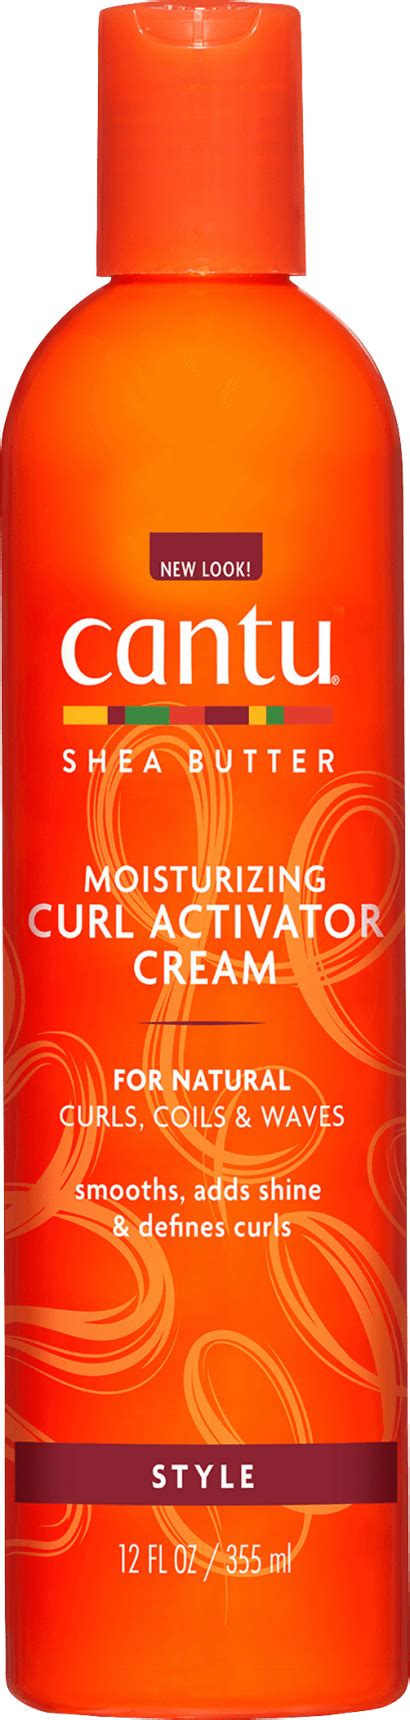 cantu Curl Activator Moisturizing Cream 355 ml - haarbiologie